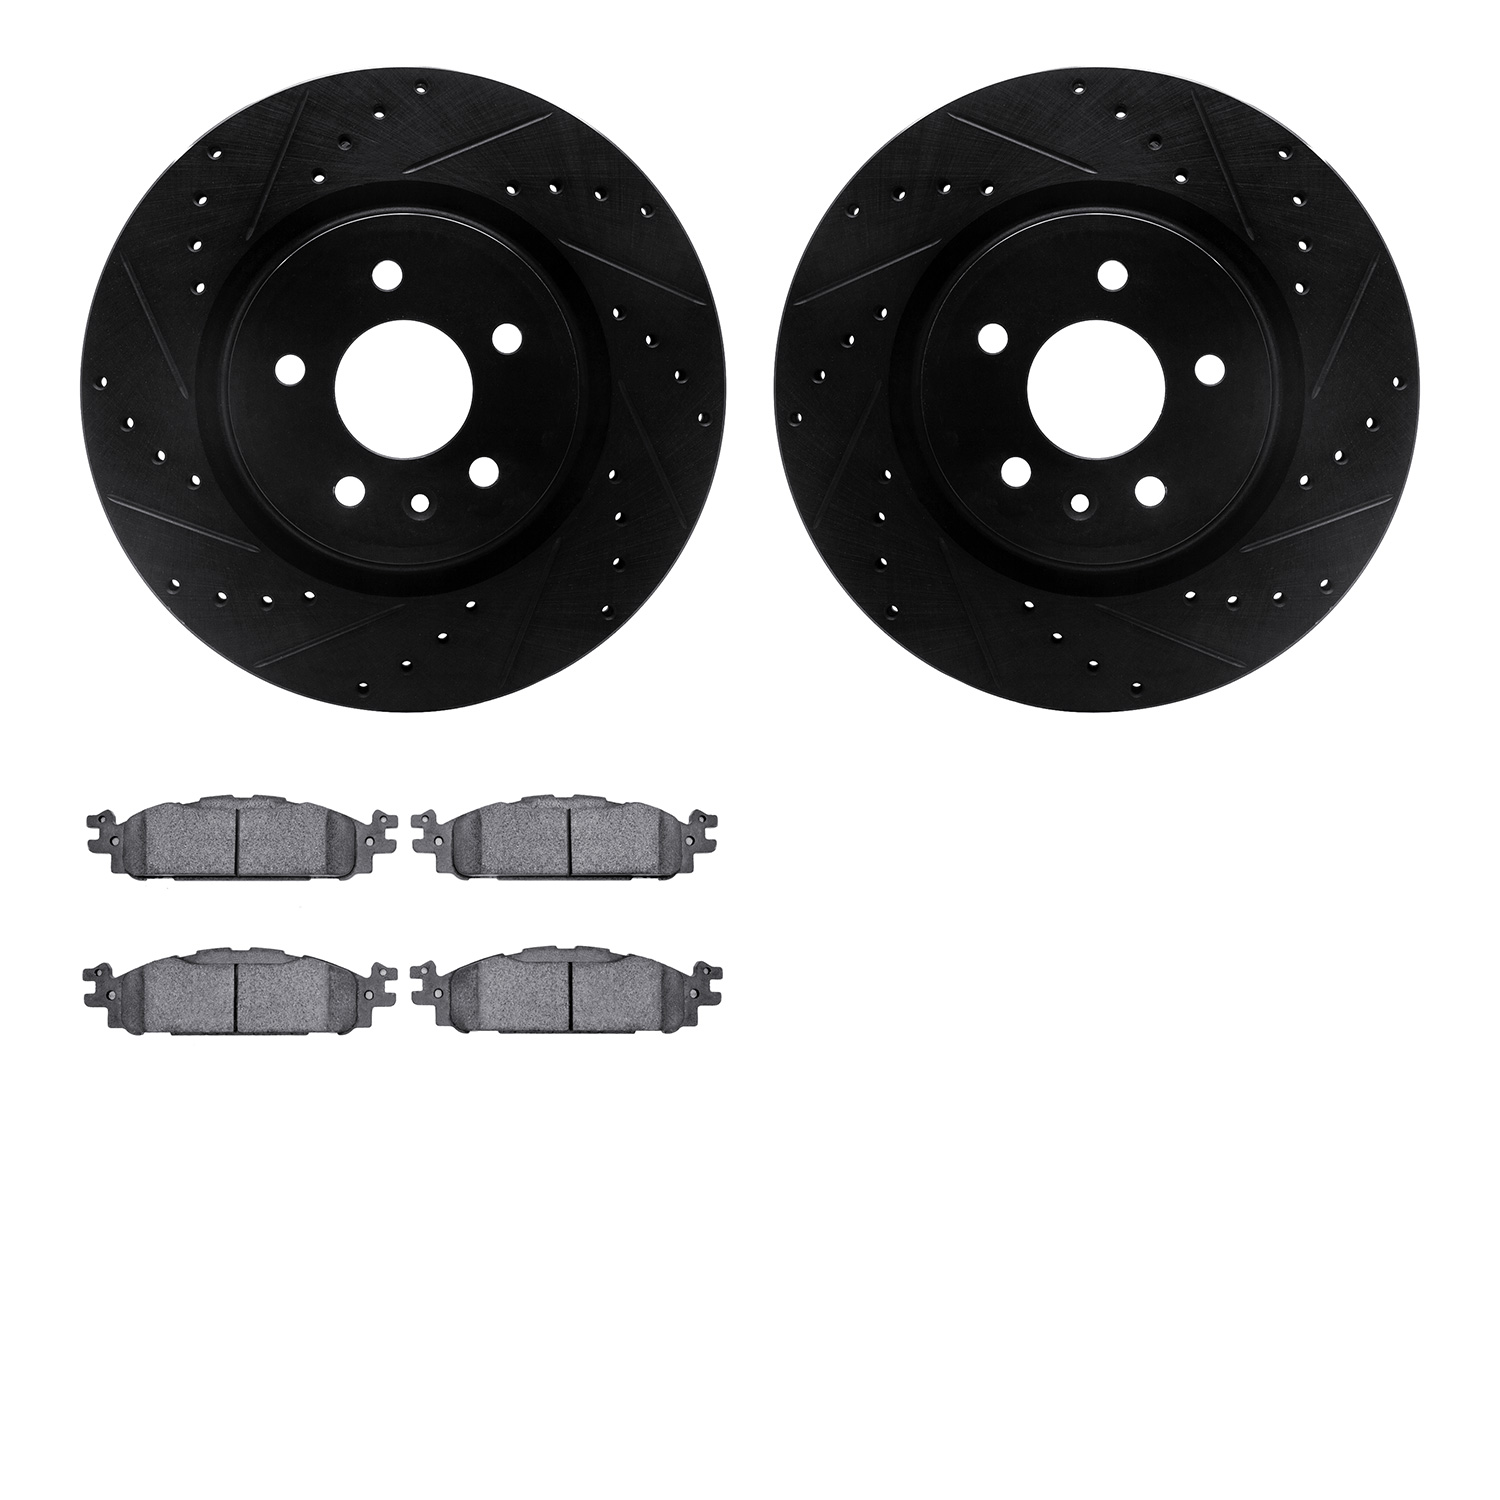 8302-54203 Drilled/Slotted Brake Rotors with 3000-Series Ceramic Brake Pads Kit [Black], 2009-2010 Ford/Lincoln/Mercury/Mazda, P